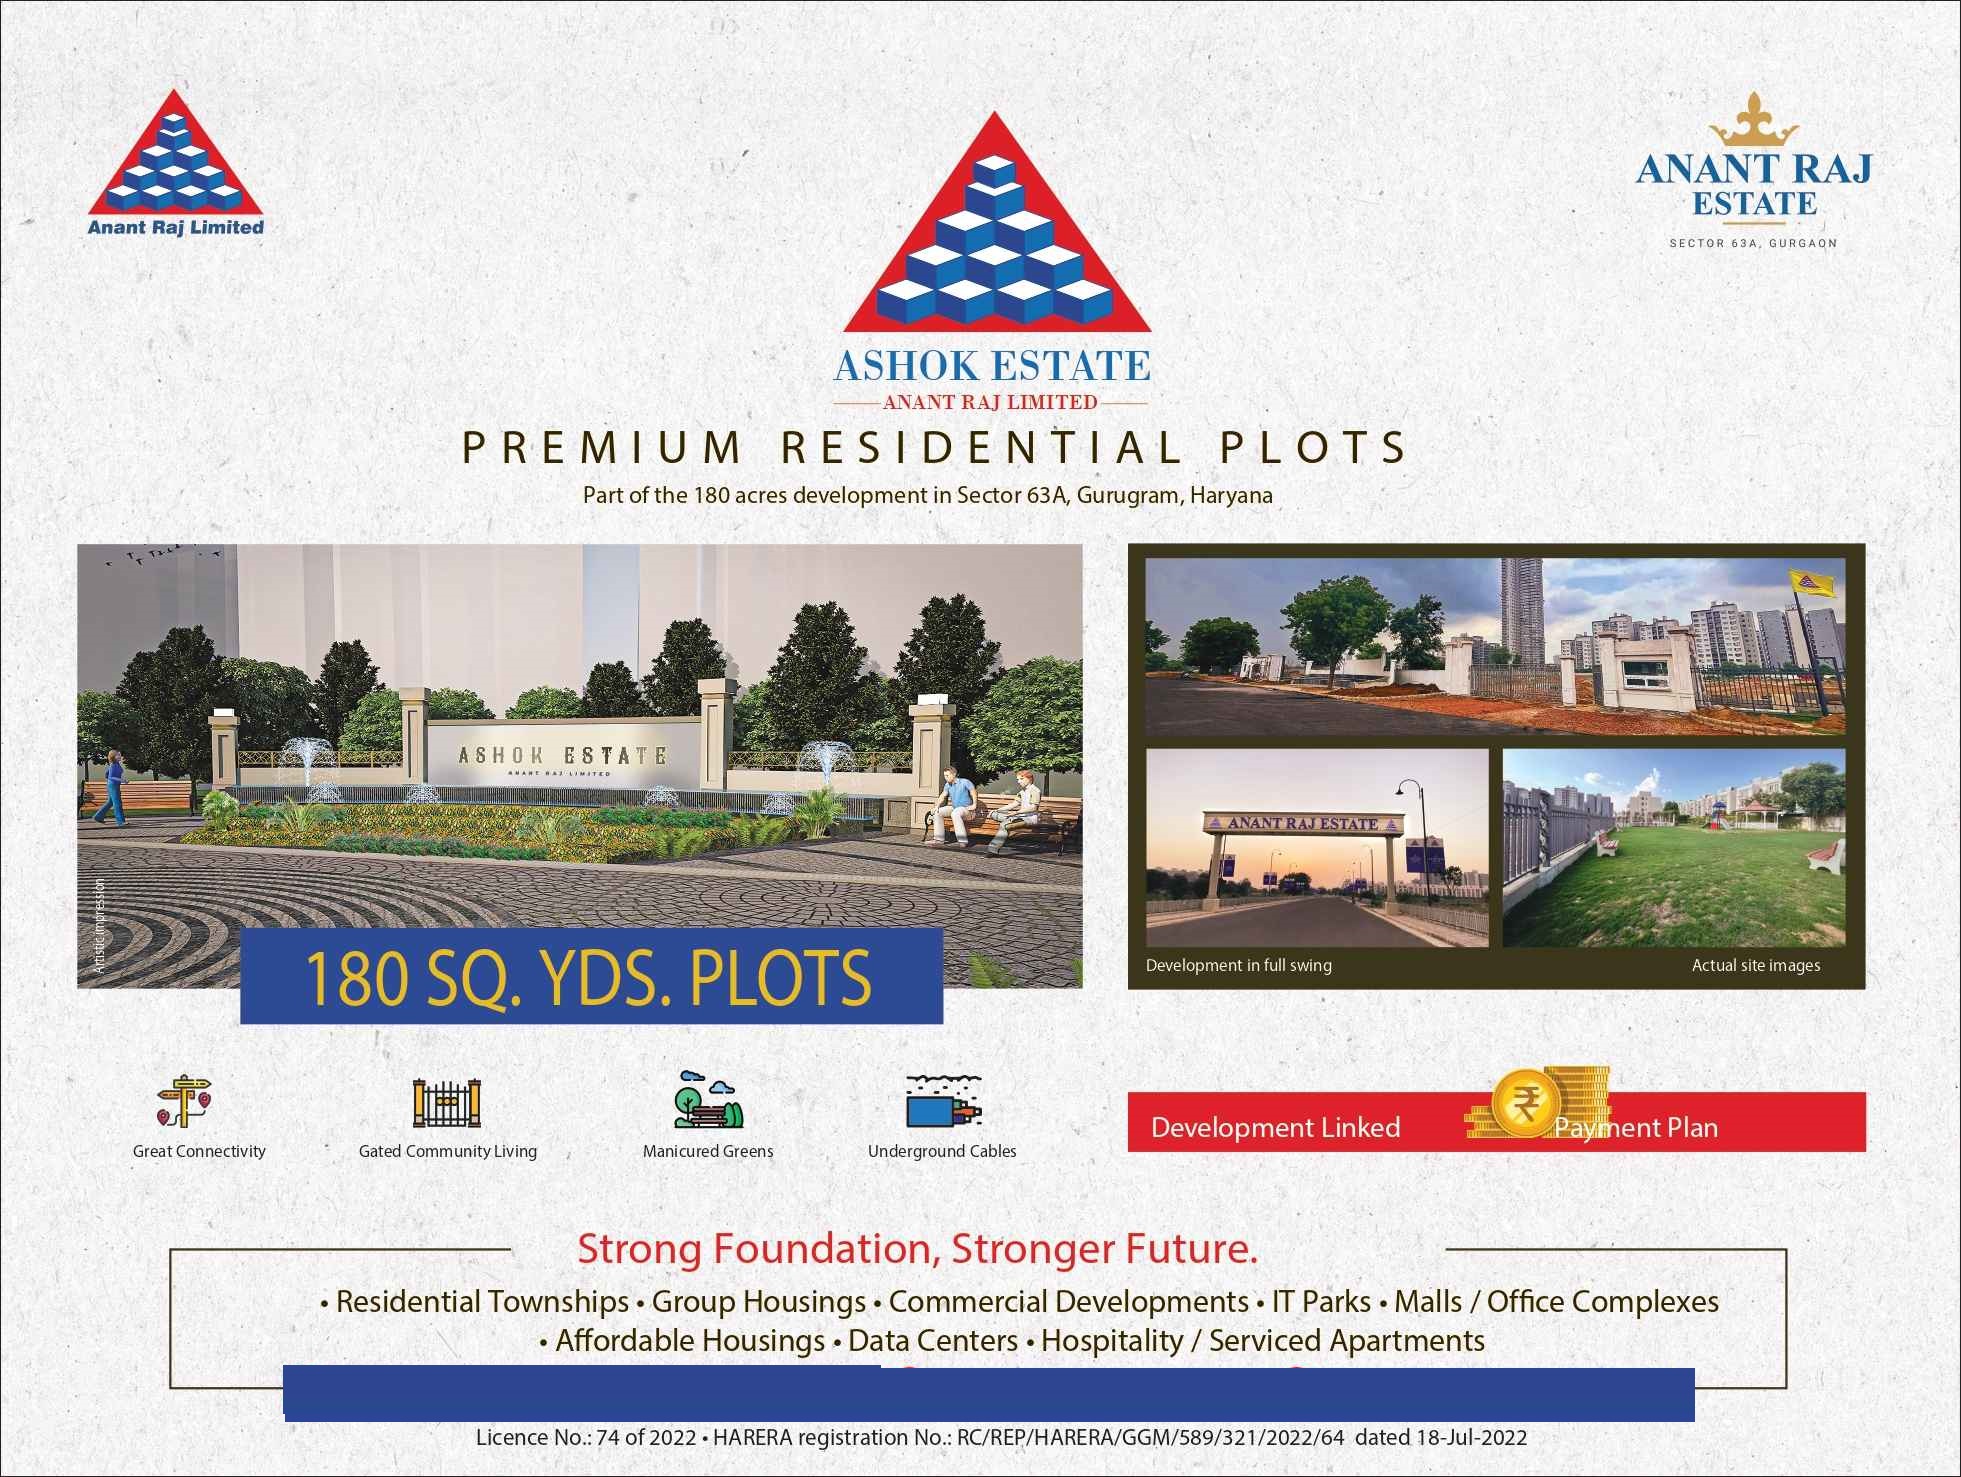 Premium Residential plots at Anant Raj Ashok Estate in Sector 63A, Gurgaon